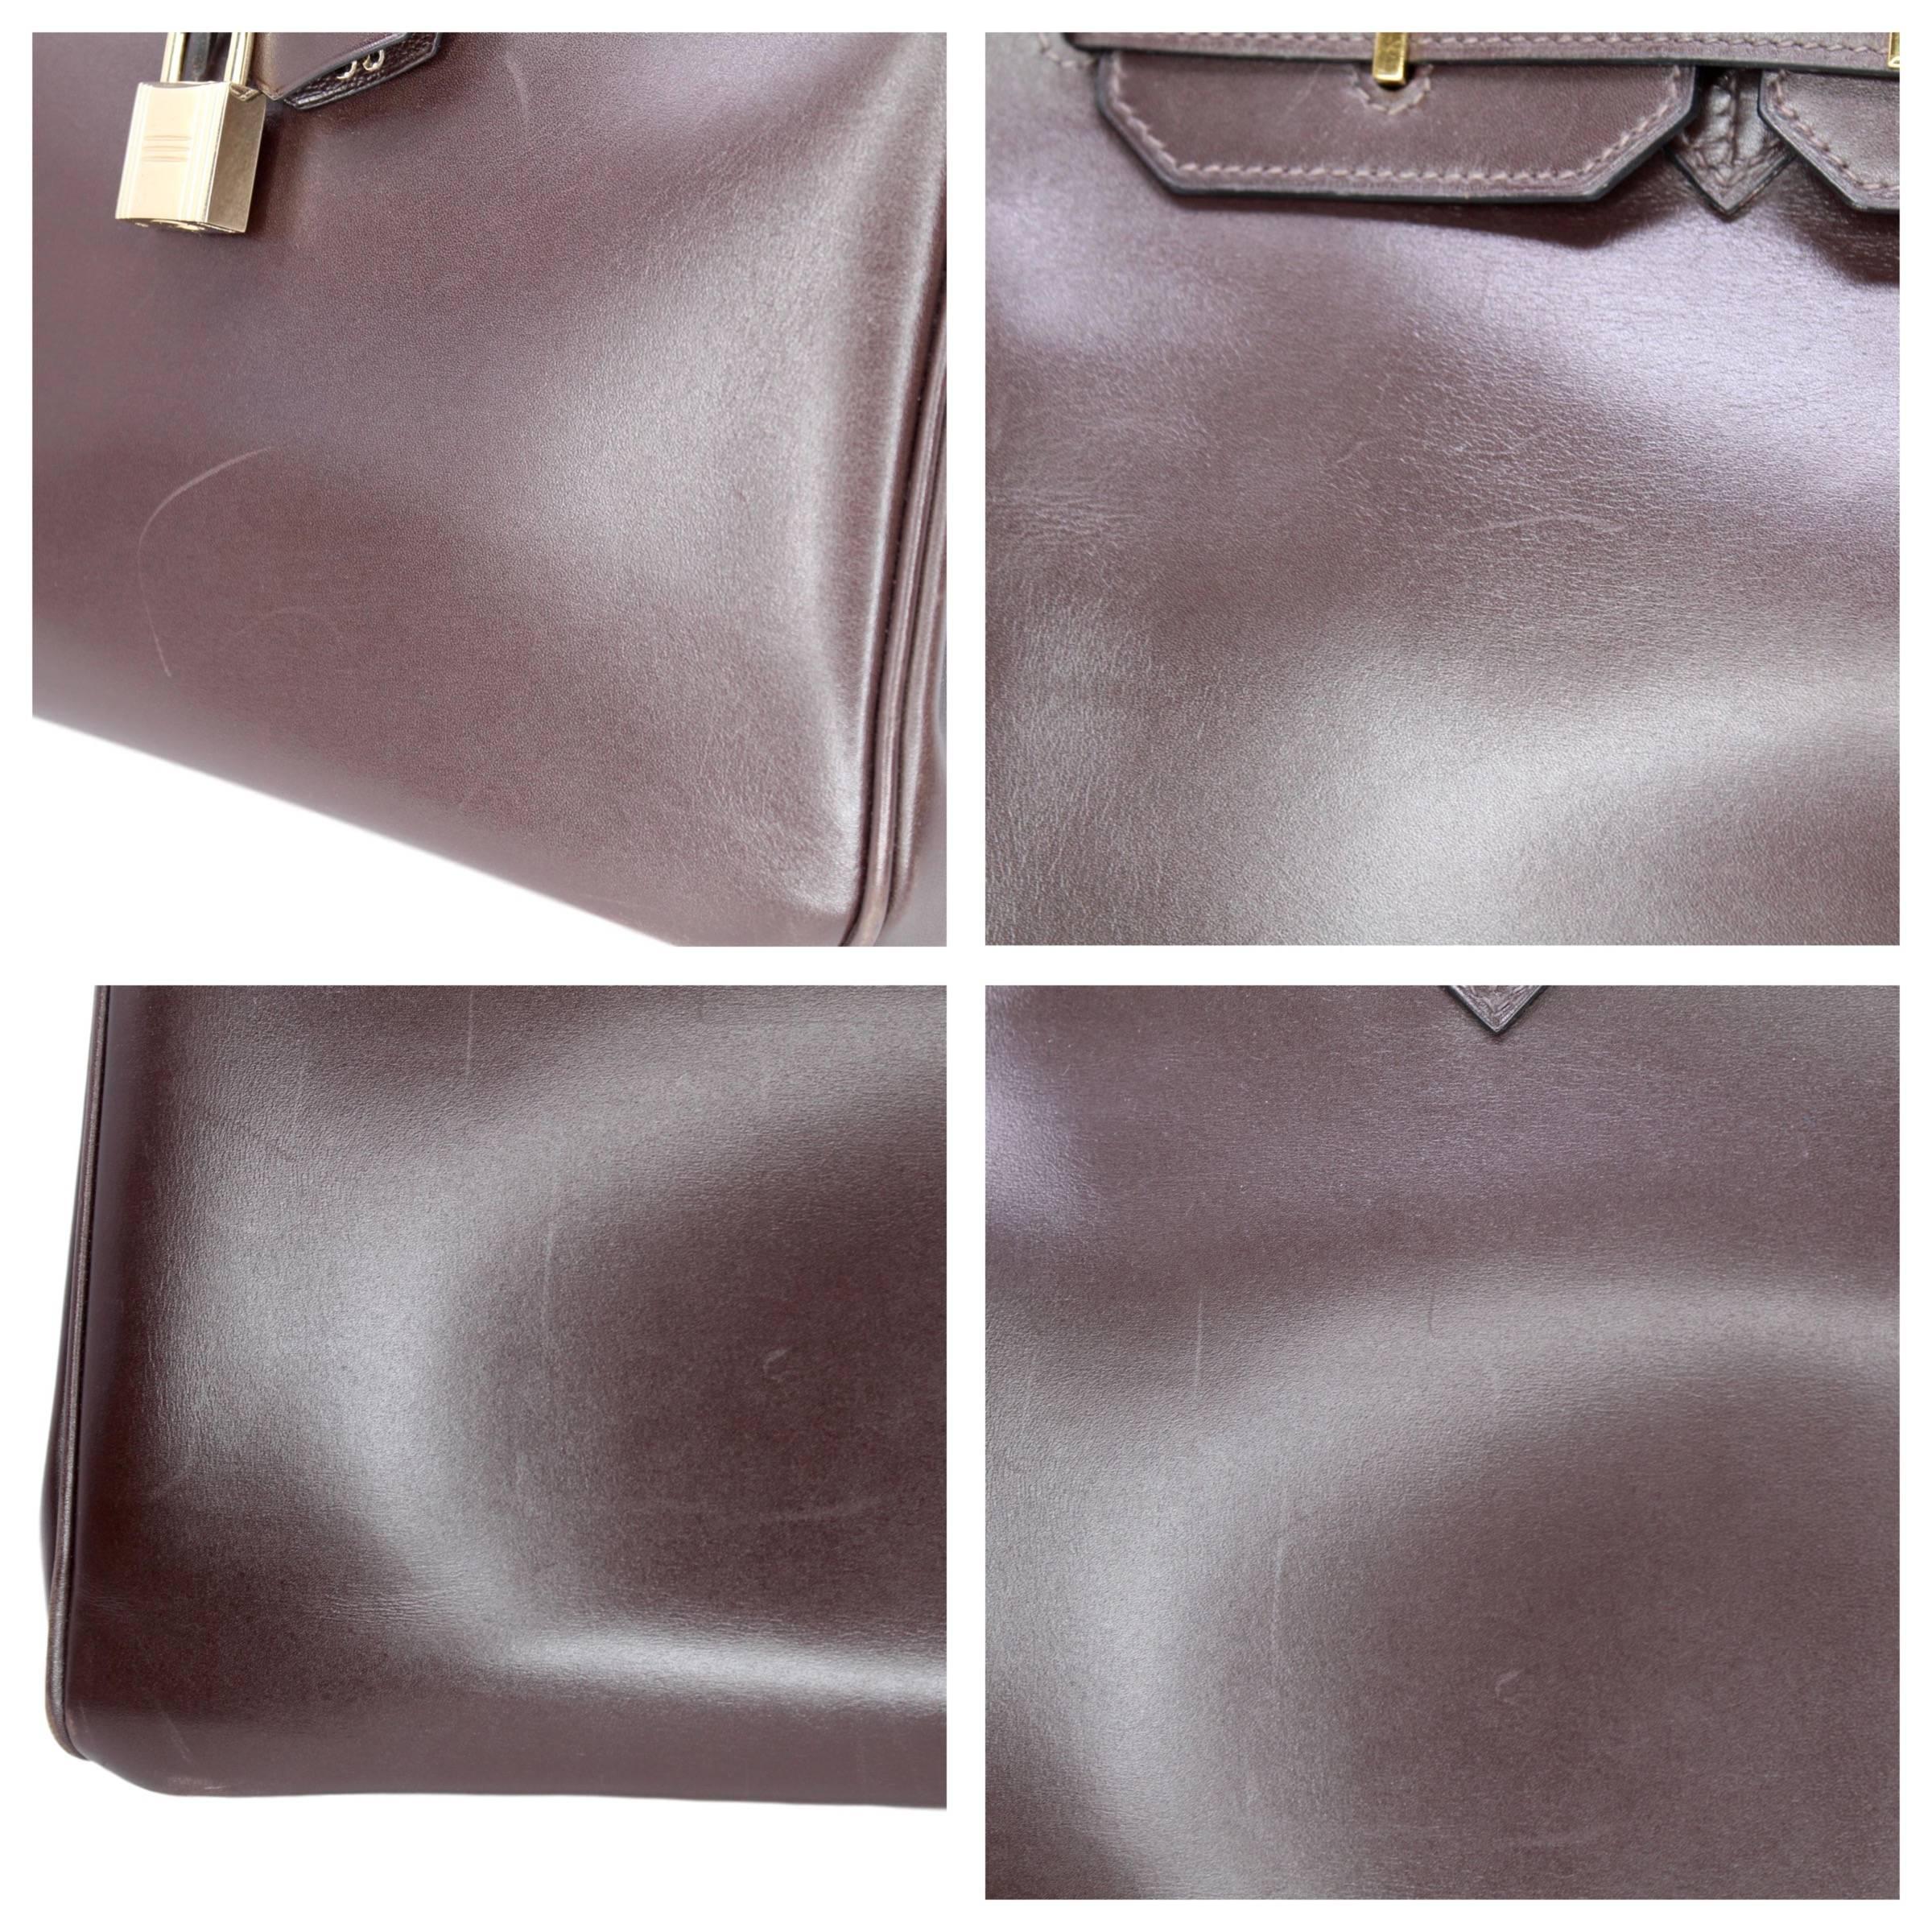 Hermes Birkin 35cm Chocolate Brown Smooth Leather - Upper-Luxury